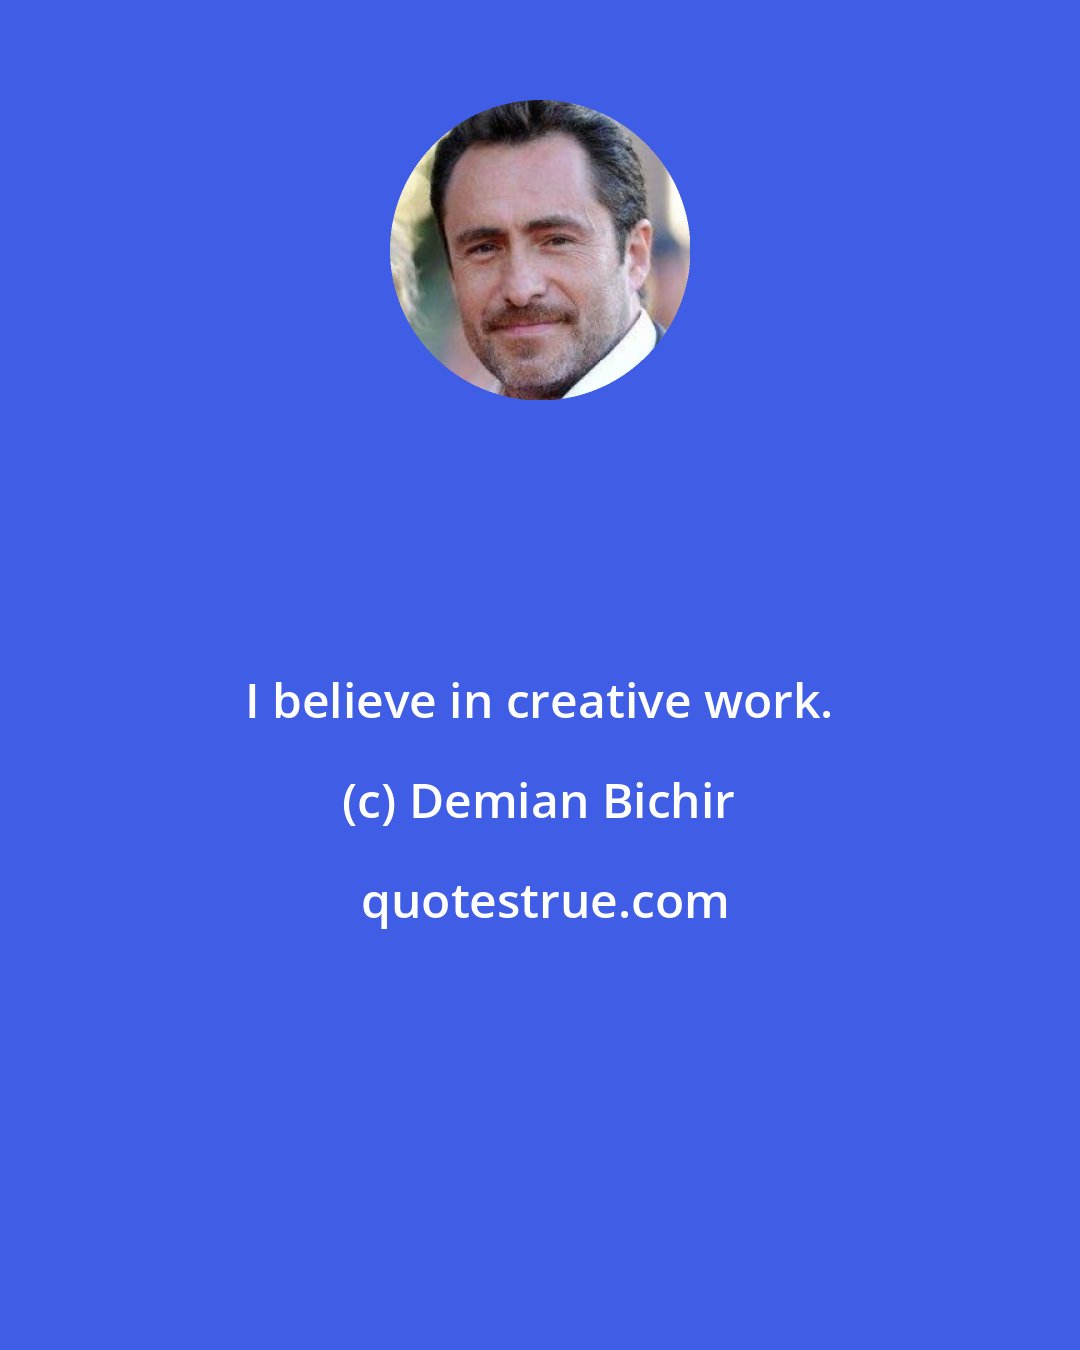 Demian Bichir: I believe in creative work.